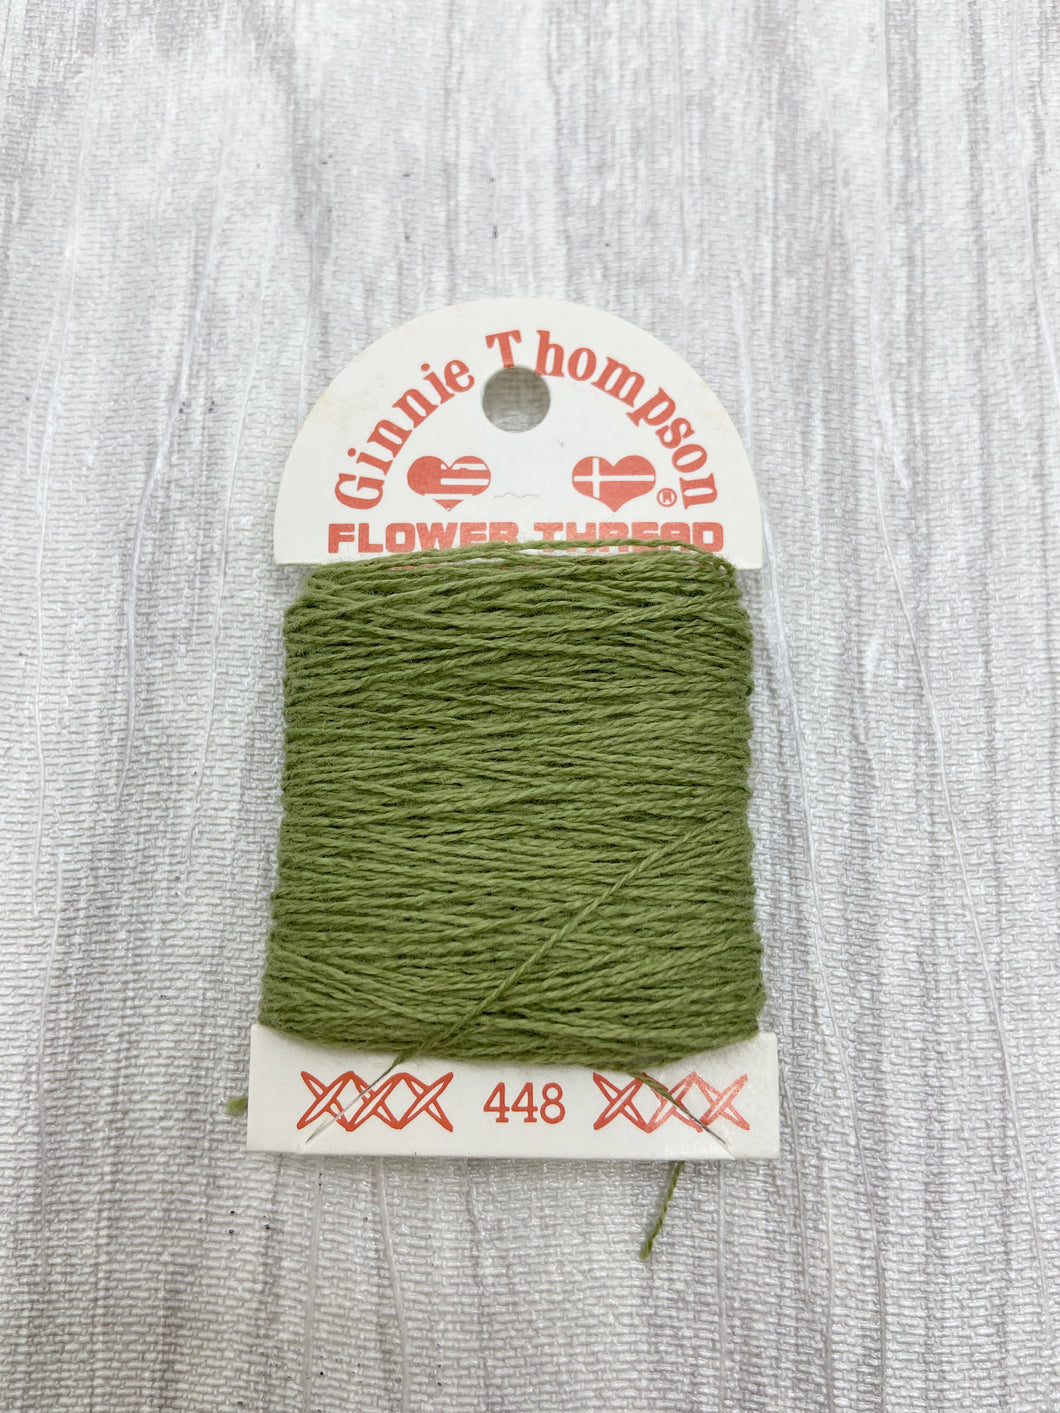 Light Olive (448) Ginnie Thompson Flower Thread